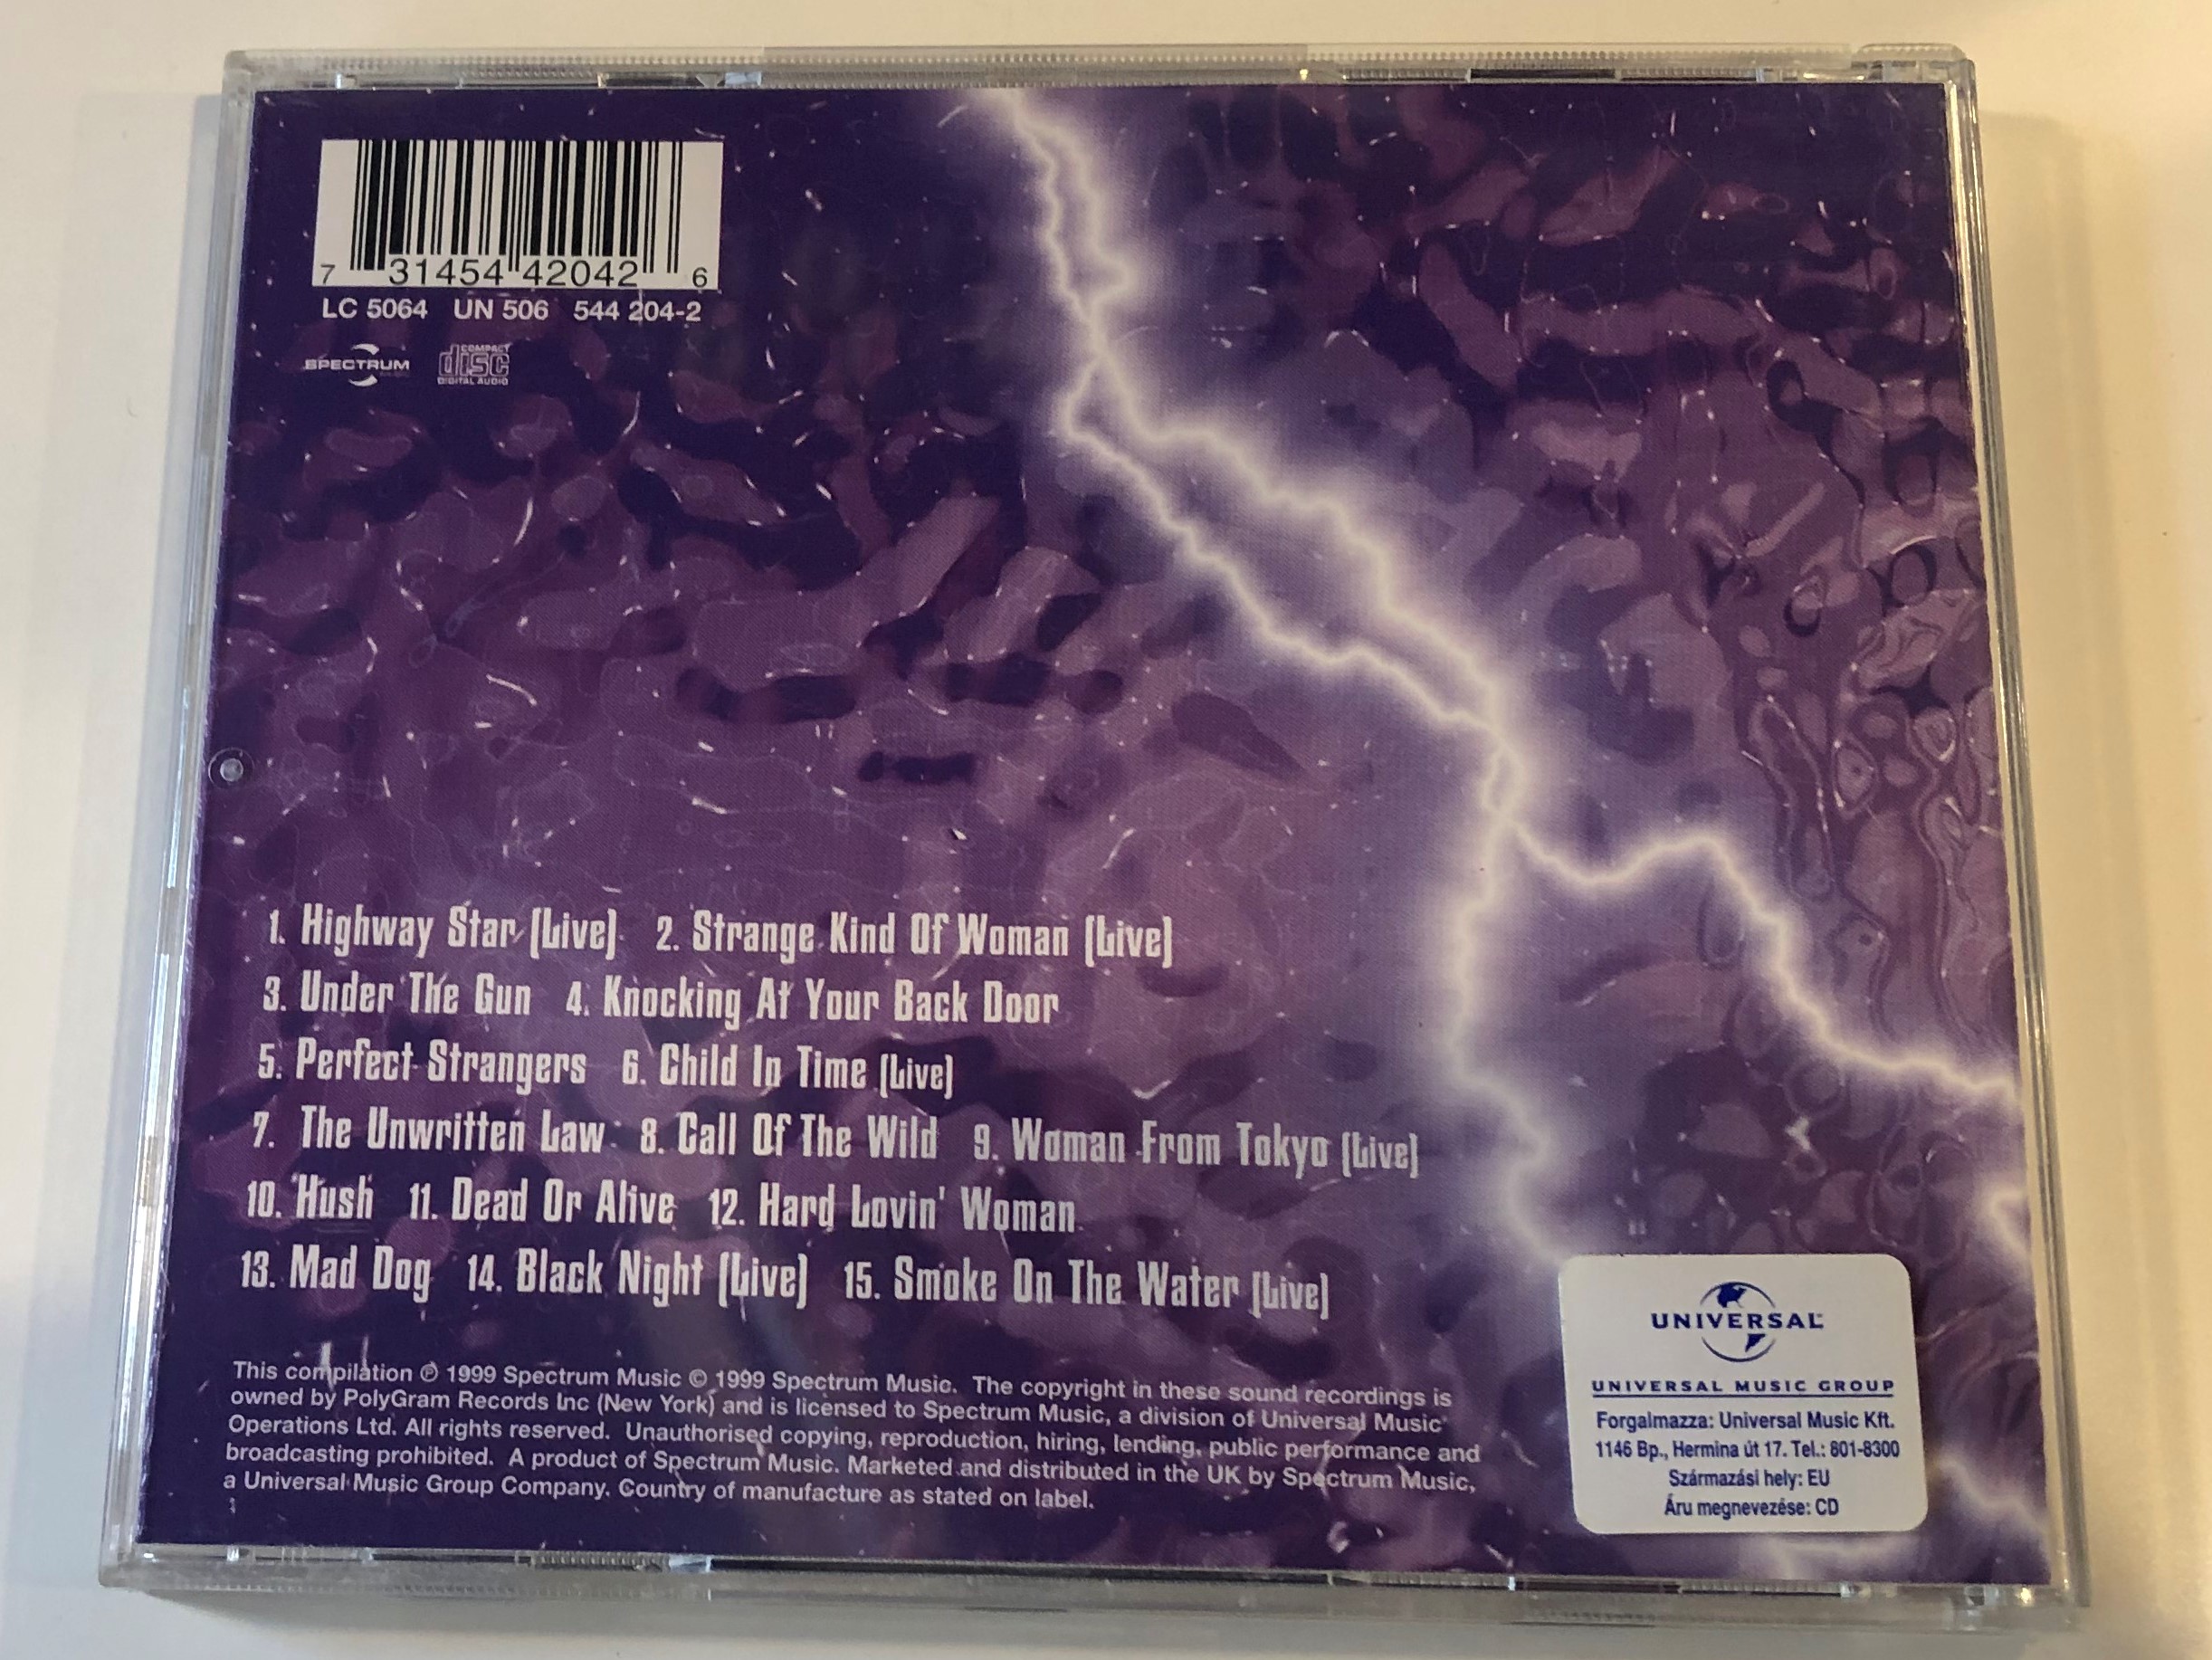 deep-purple-under-the-gun-featuring-hush-perfect-strangers-knocking-at-your-back-door-spectrum-music-audio-cd-1999-544-204-2-2-.jpg